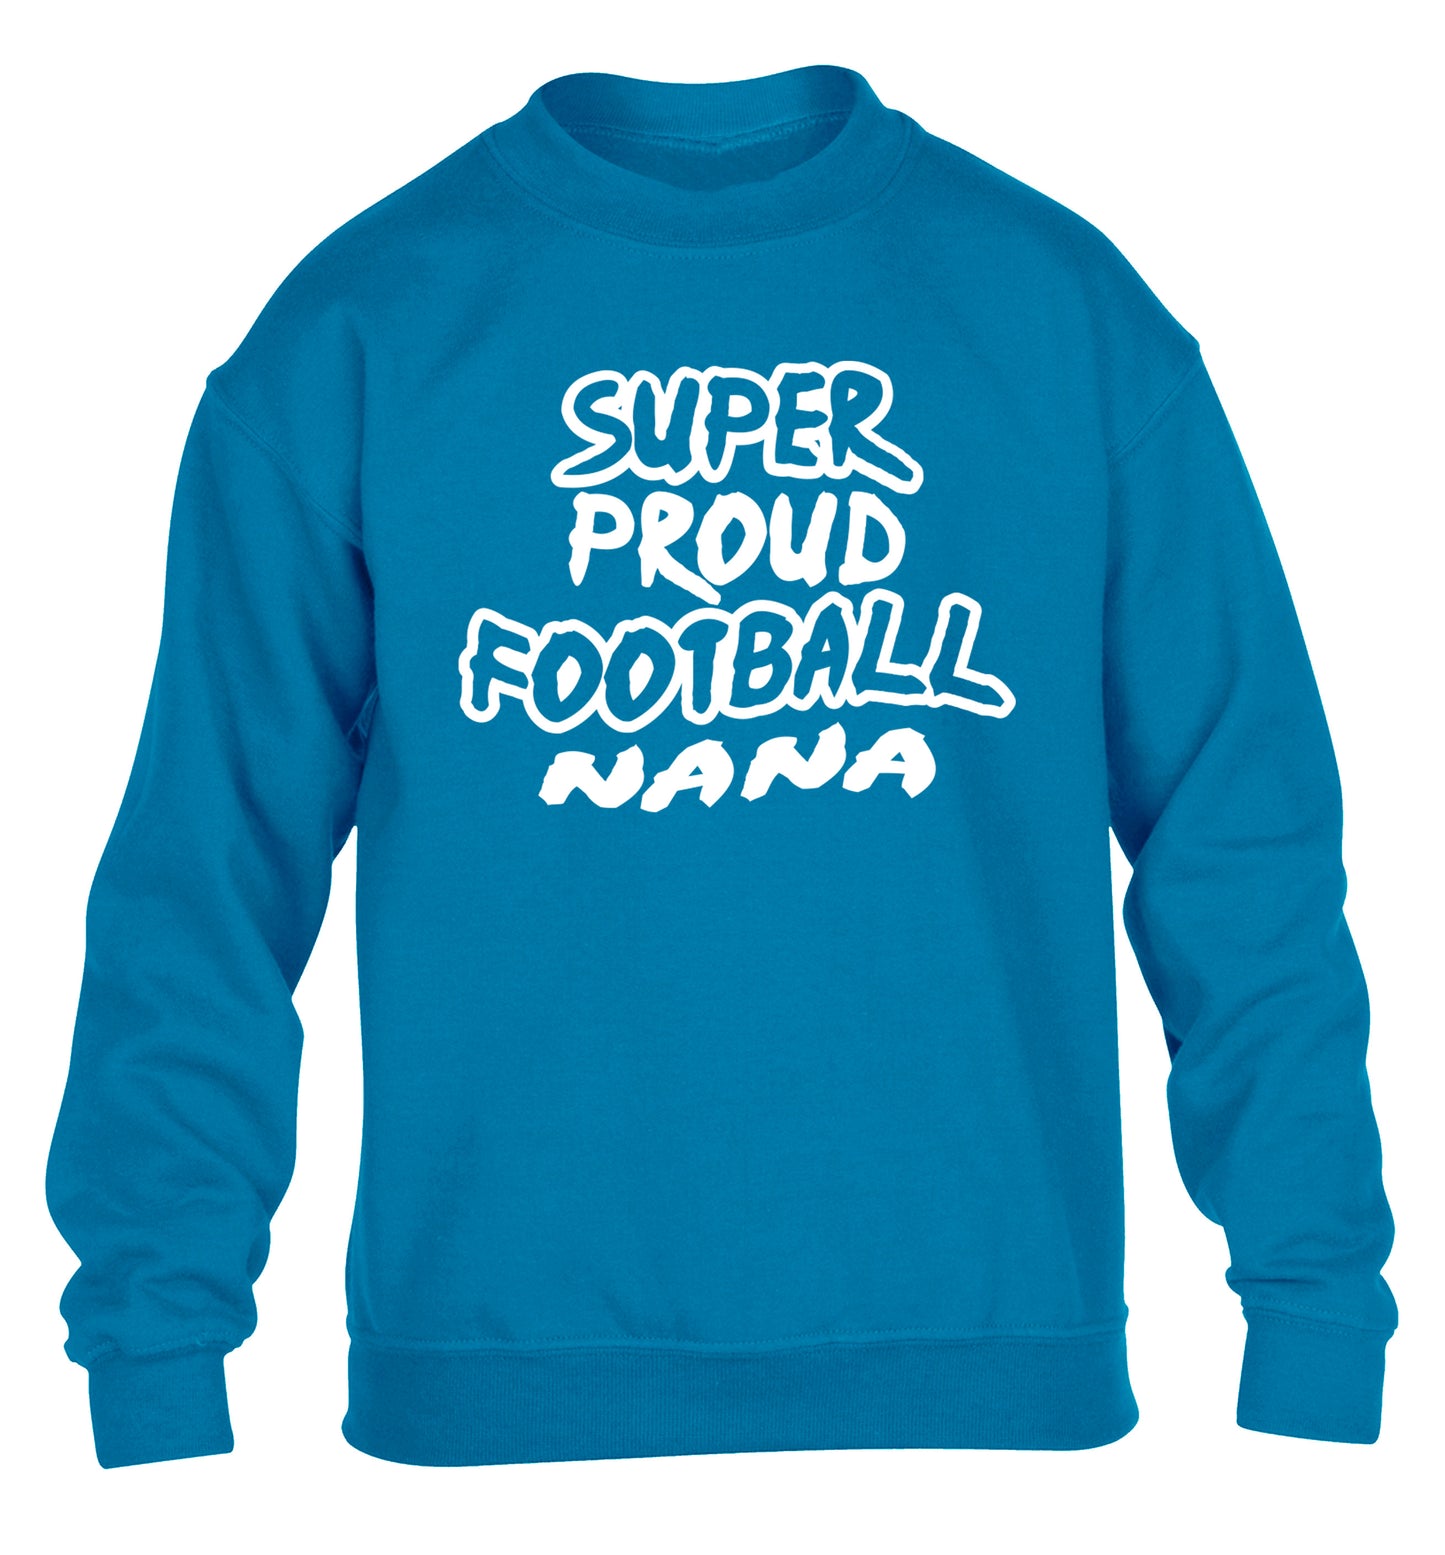 Super proud football nana children's blue sweater 12-14 Years